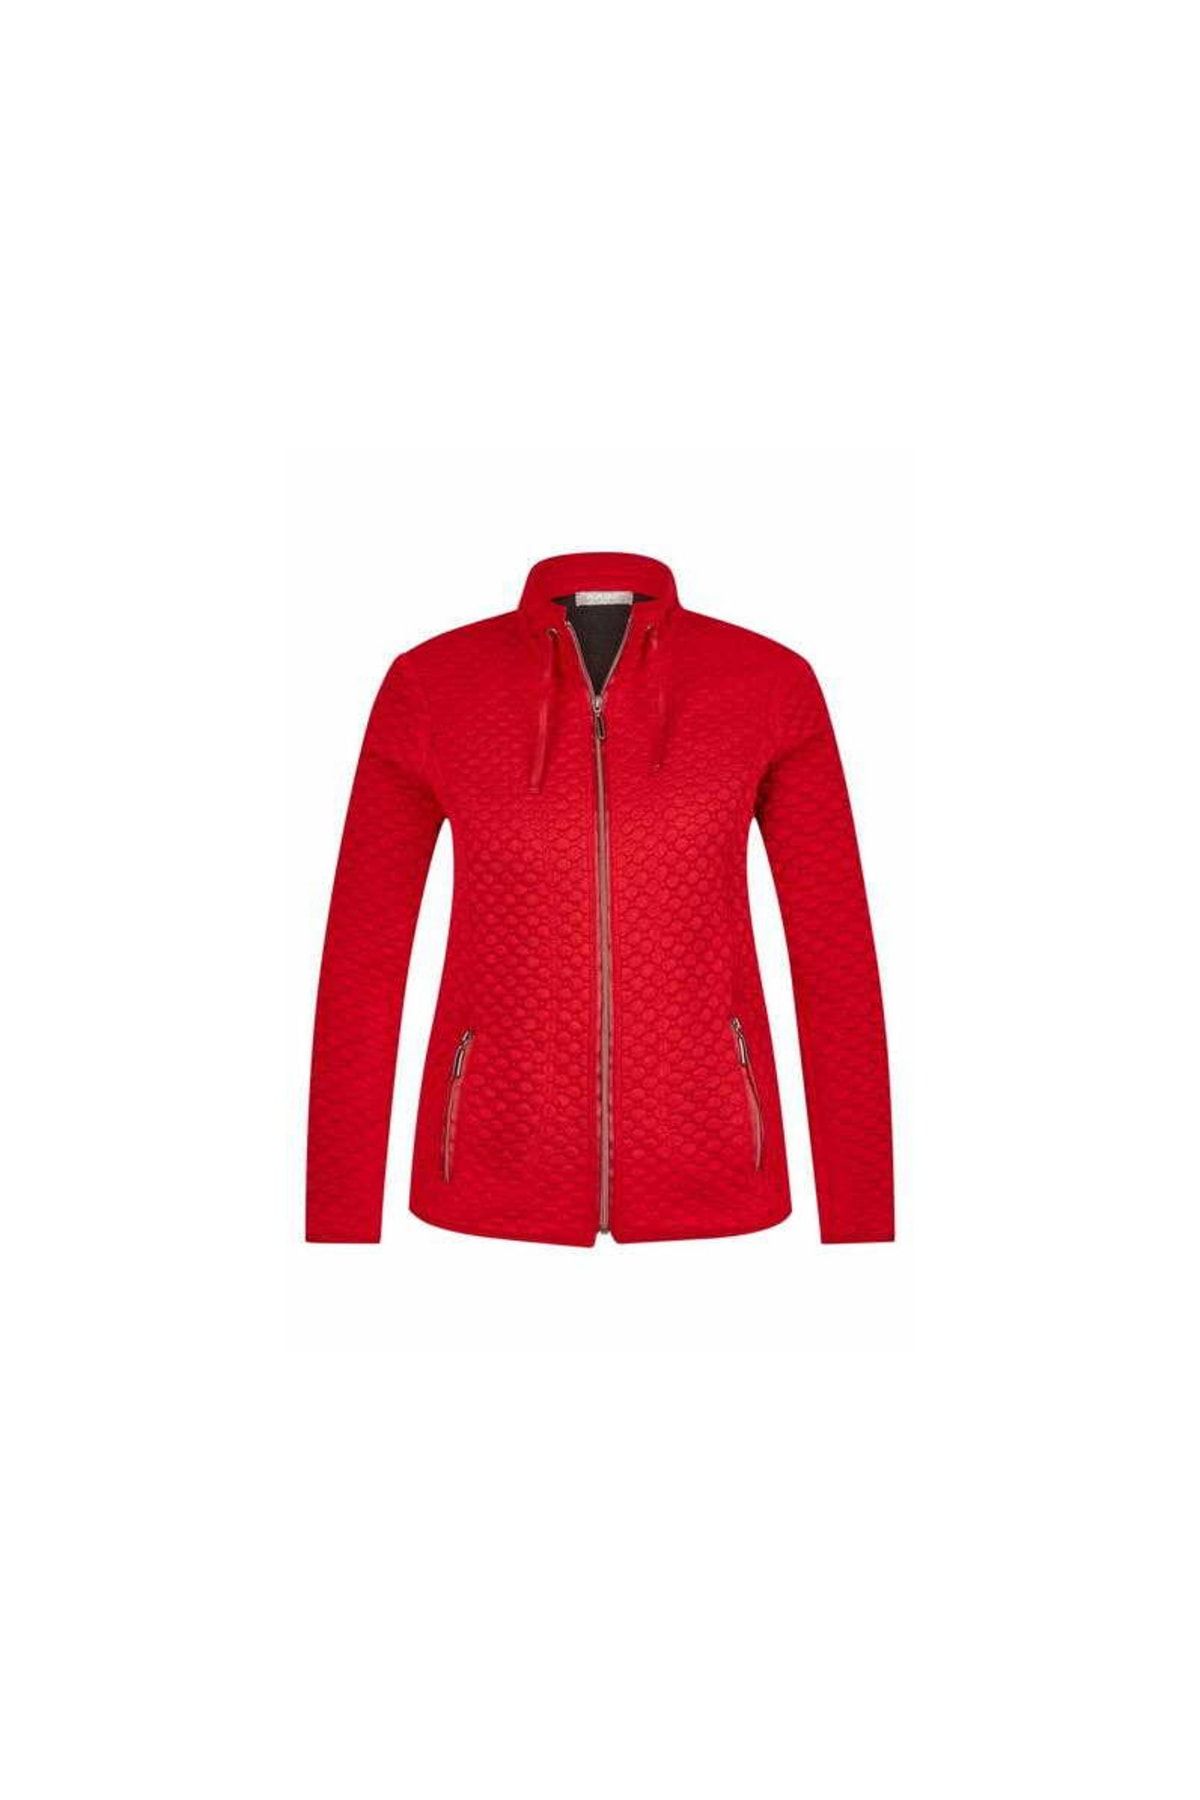 Jacket Red Rabe 1920 - Regular Trendyol fit - -